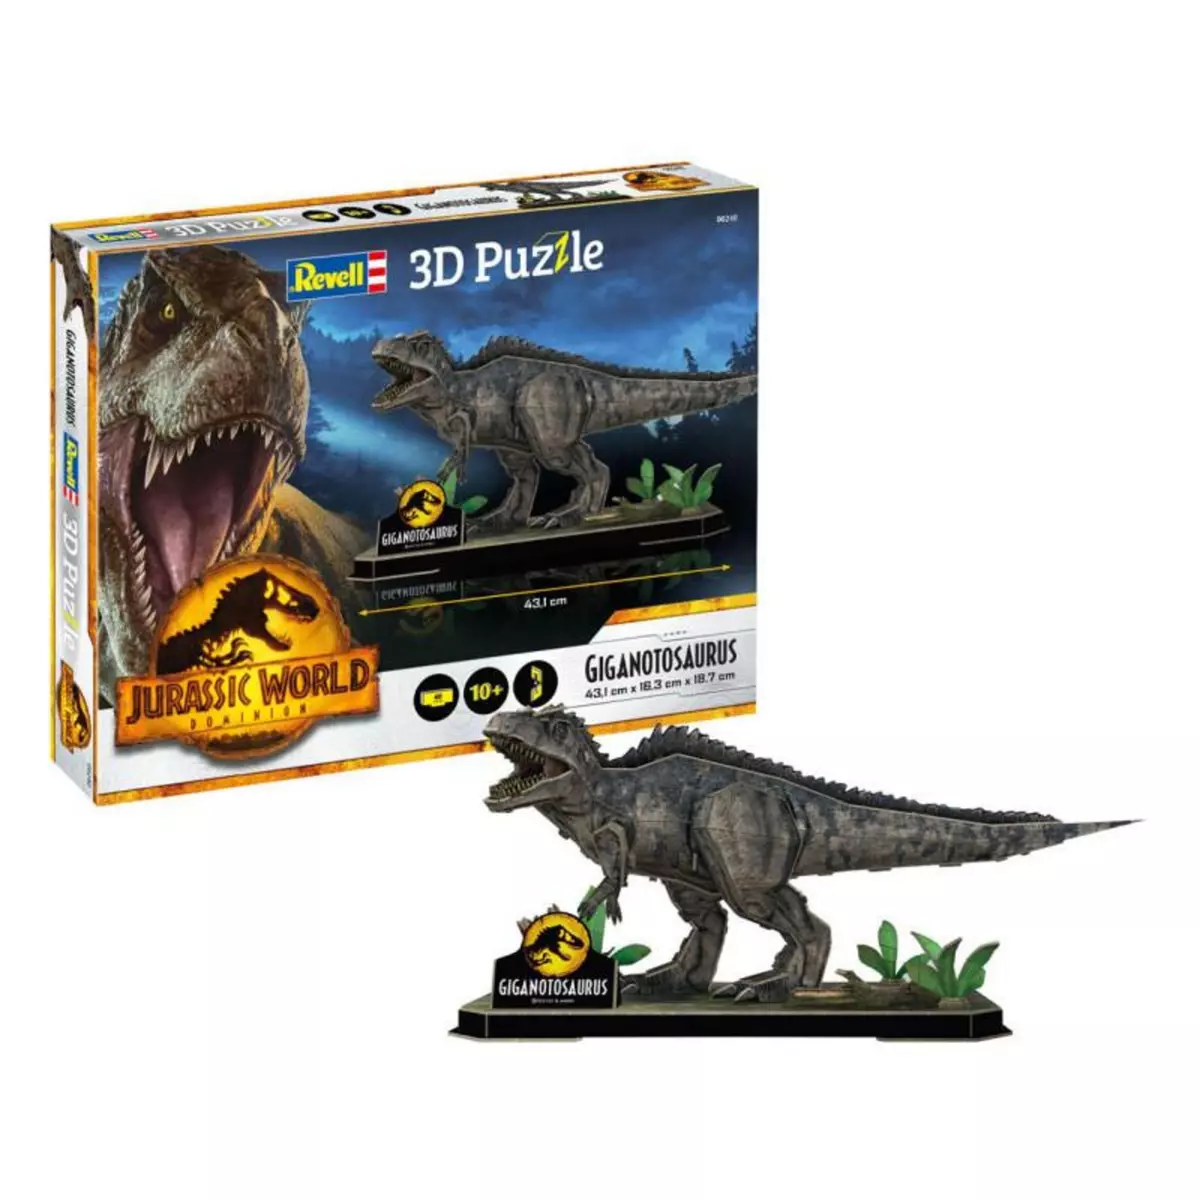 REVELL Revell 3D Puzzle Building Kit - Jurassic WD Gigano 00240